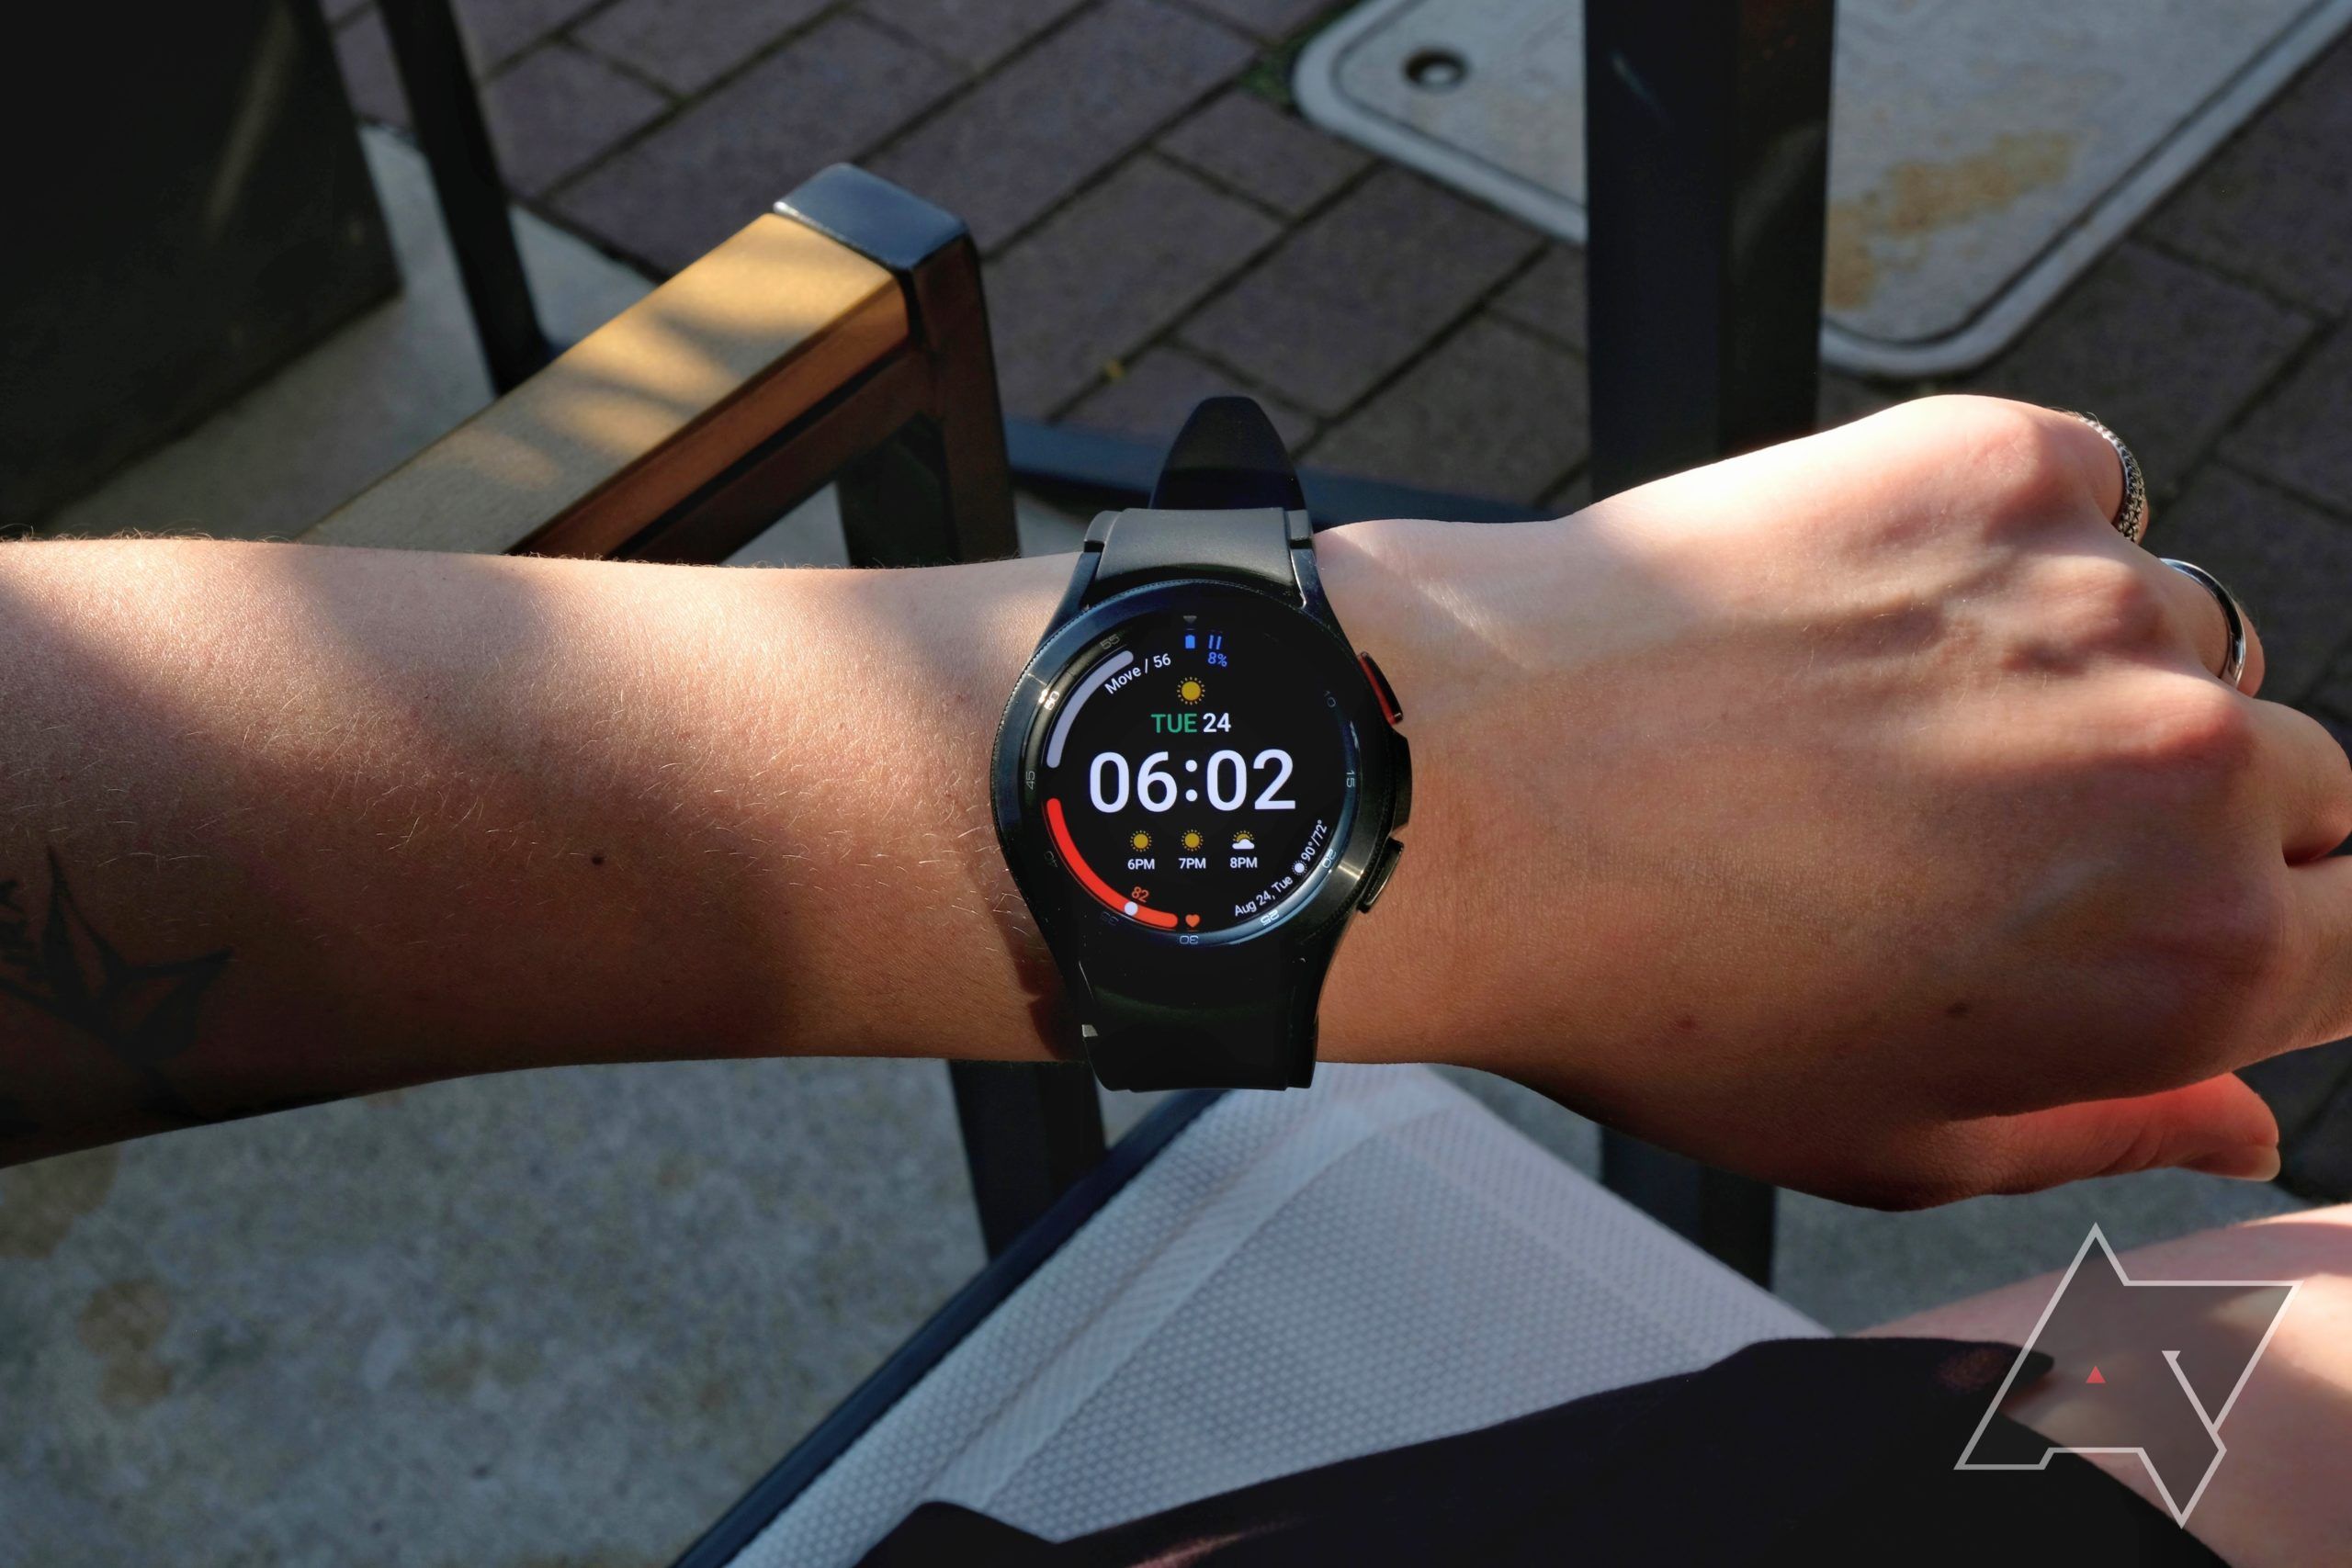 Samsung smartwatch on wrist